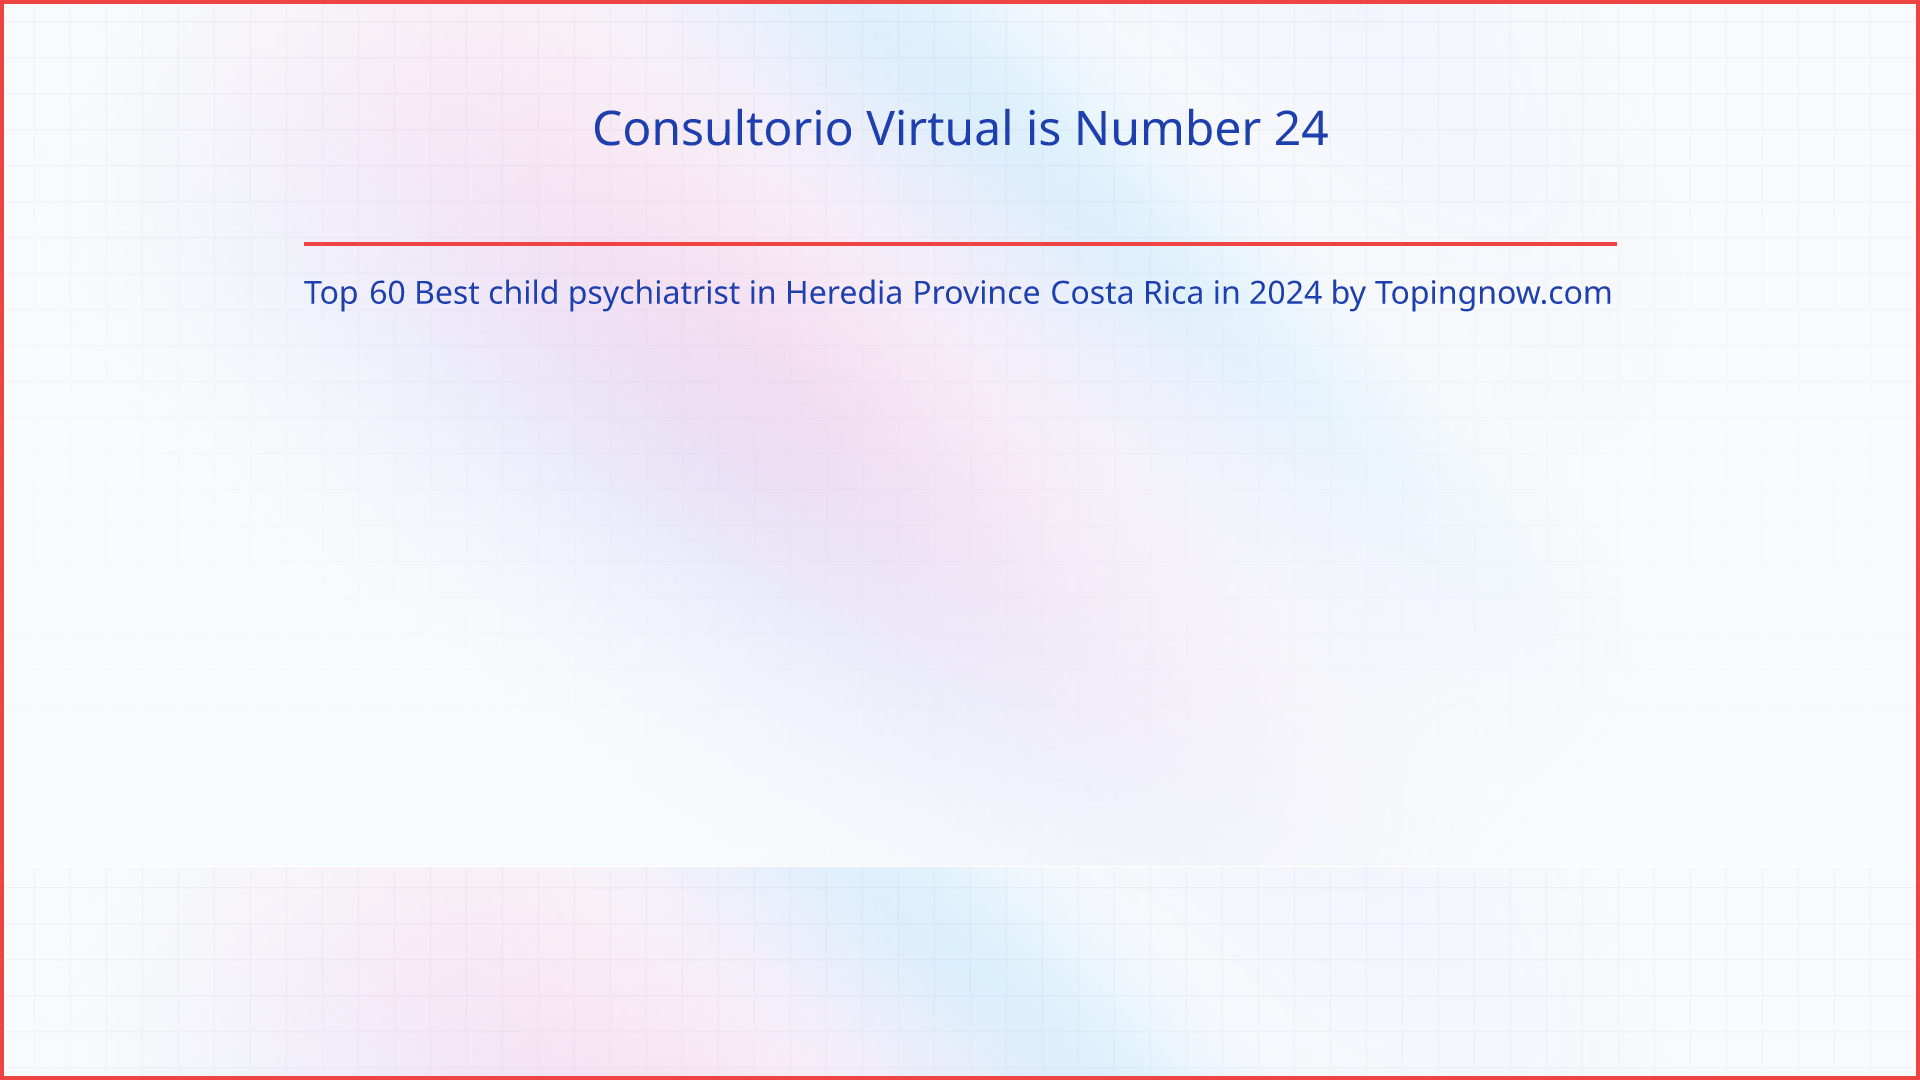 Consultorio Virtual: Top 60 Best child psychiatrist in Heredia Province Costa Rica in 2024